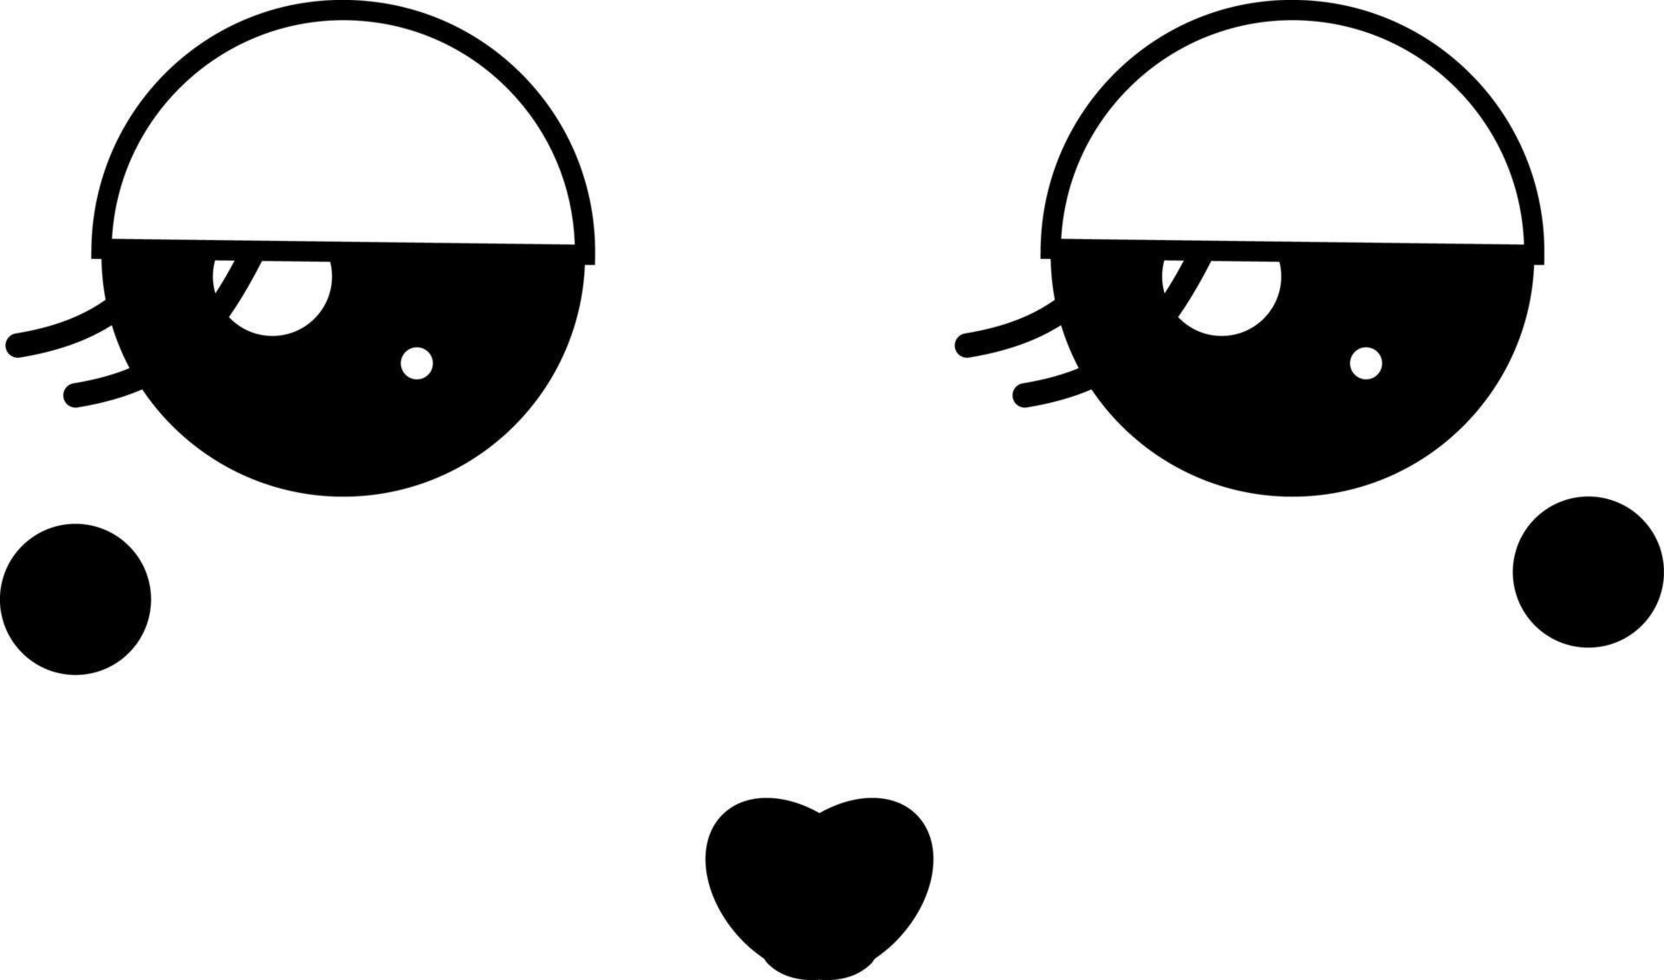 Romantic emoji, illustration, vector on a white background.